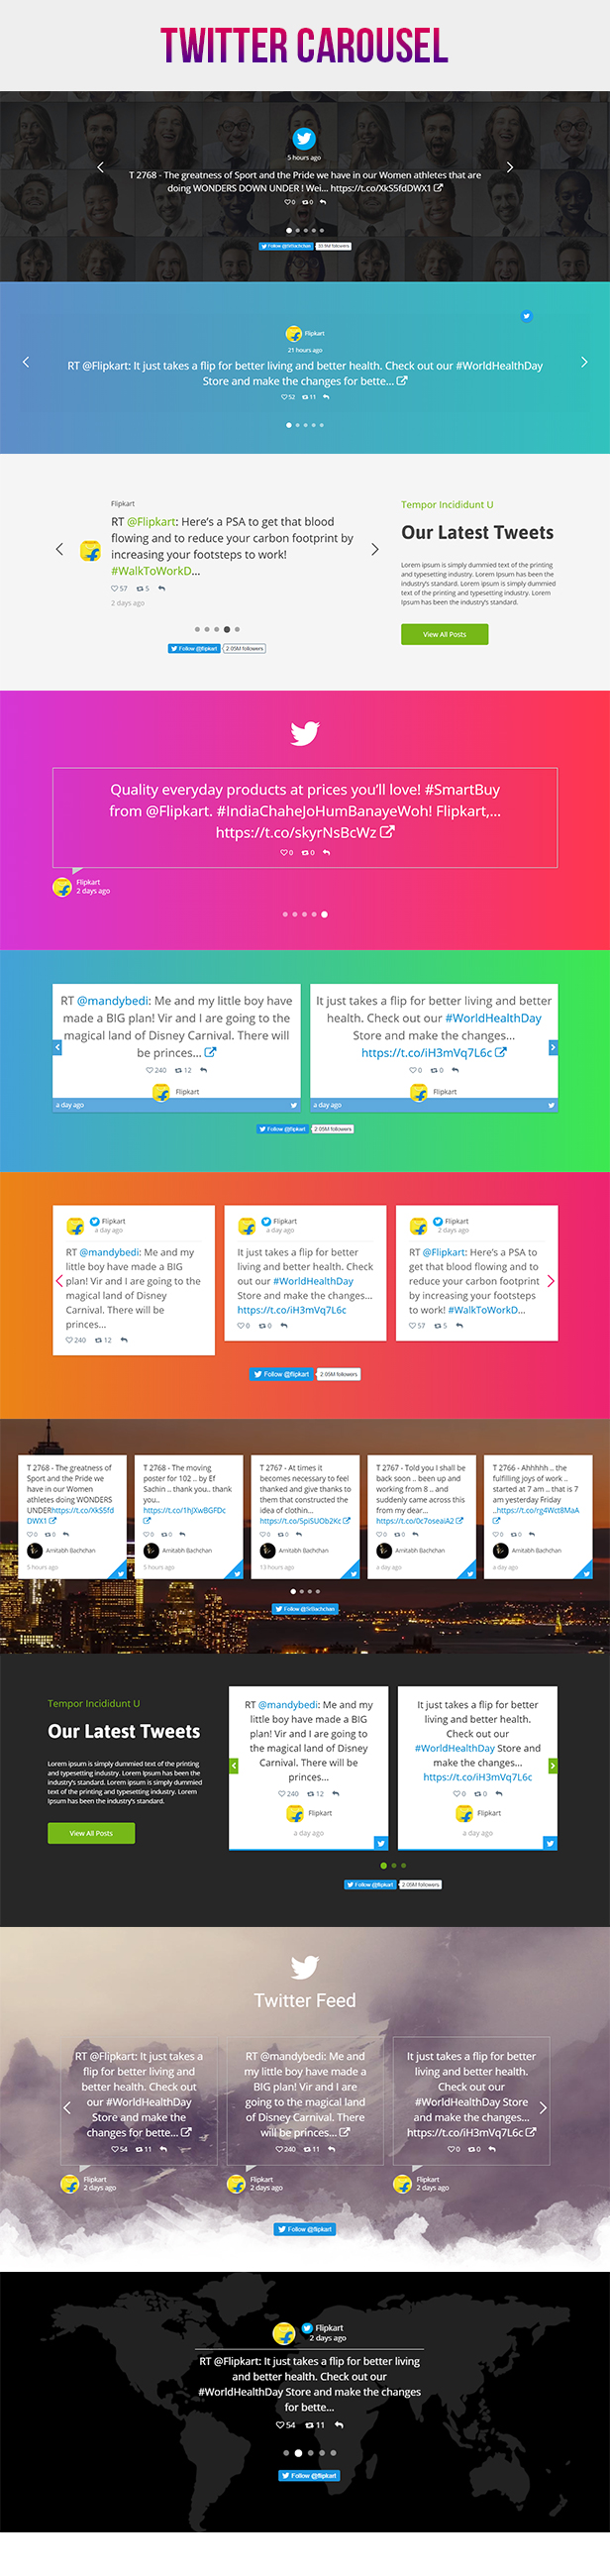 WordPress - Twitter Feed Stream Grid With Carousel